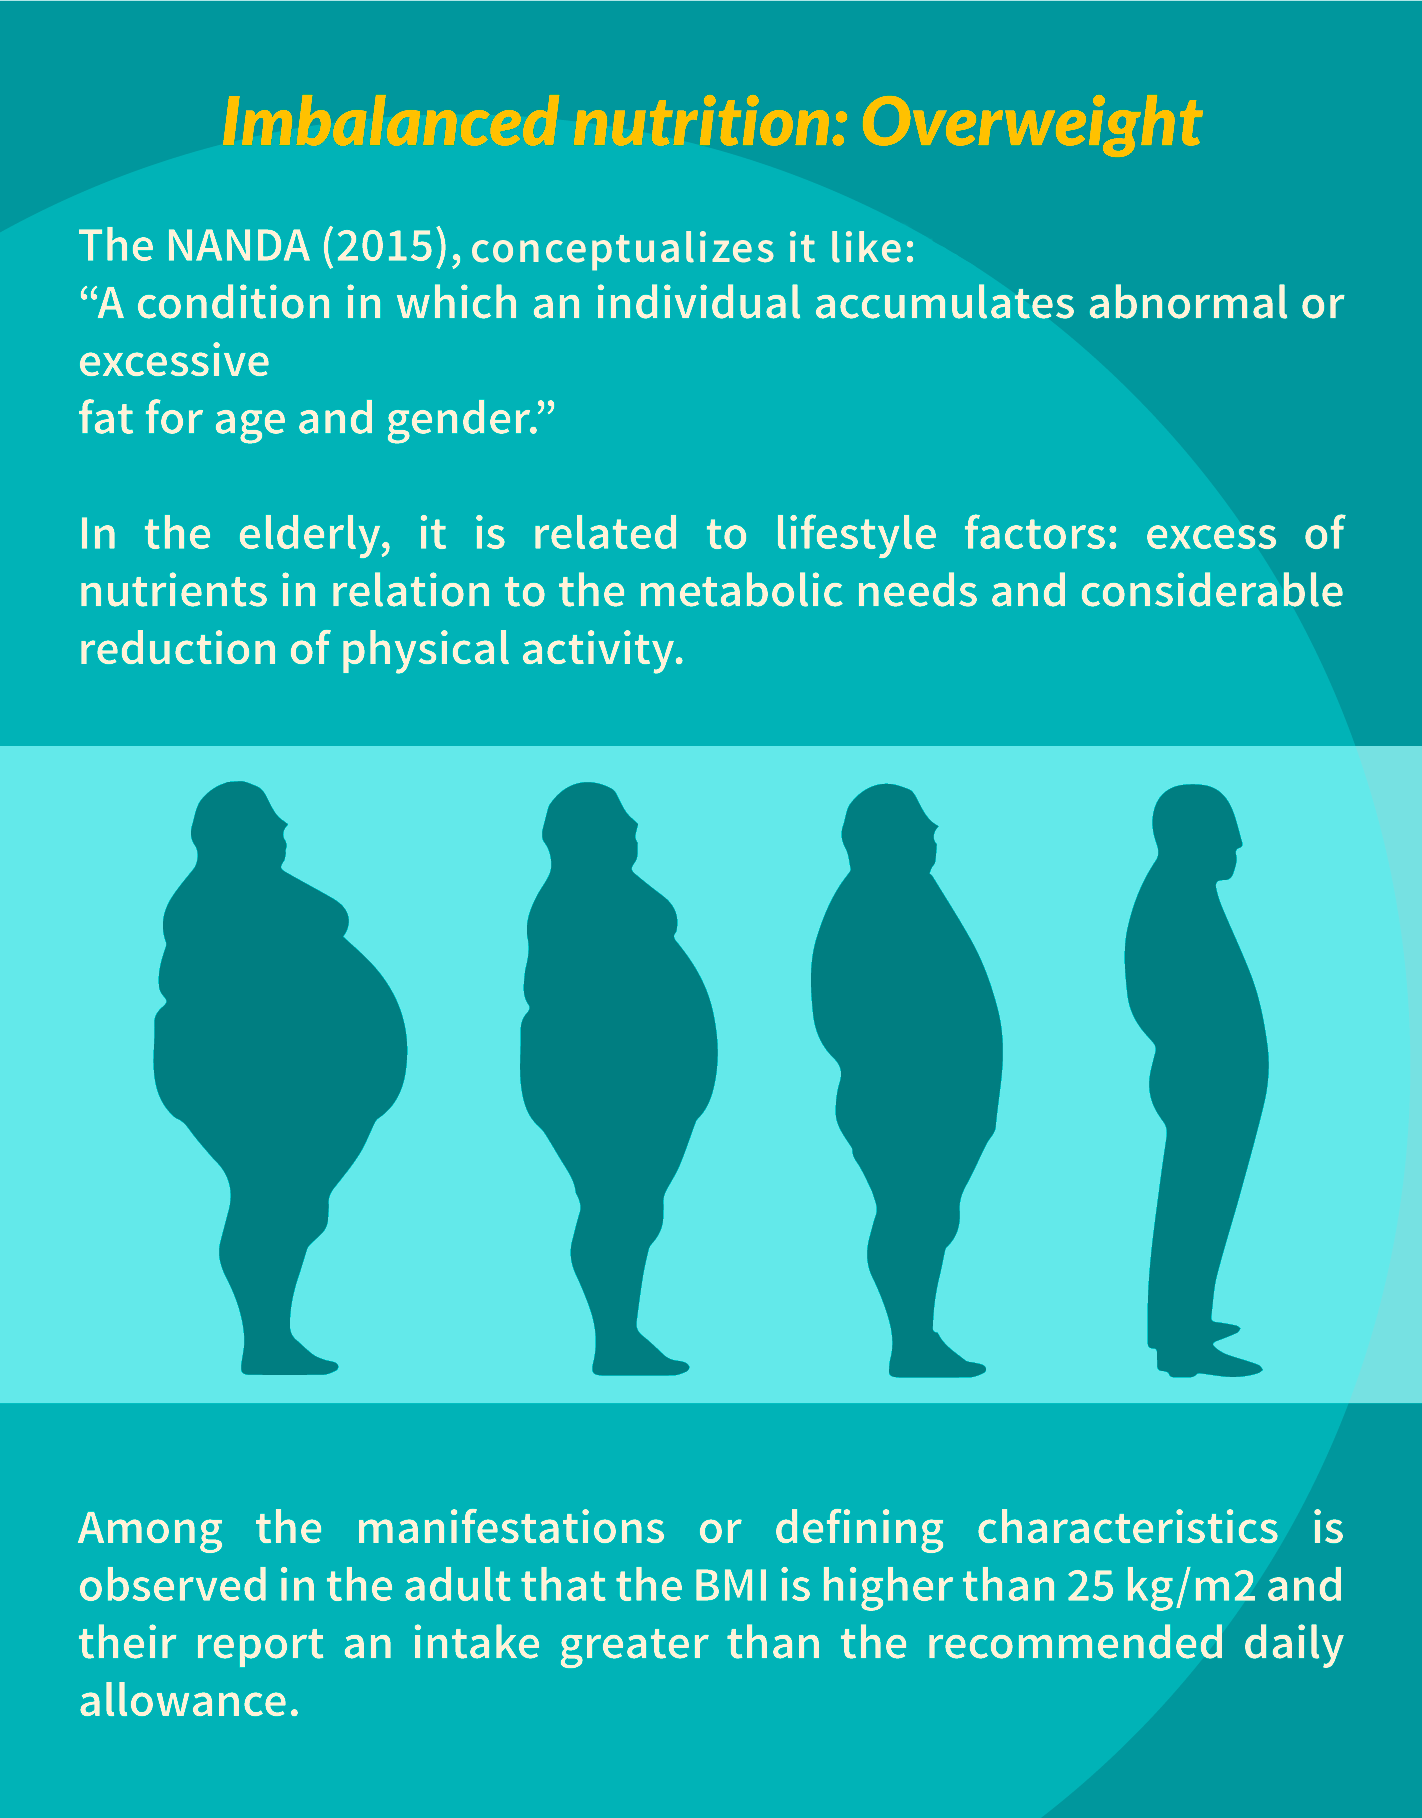 Nutritional imbalance - overweight